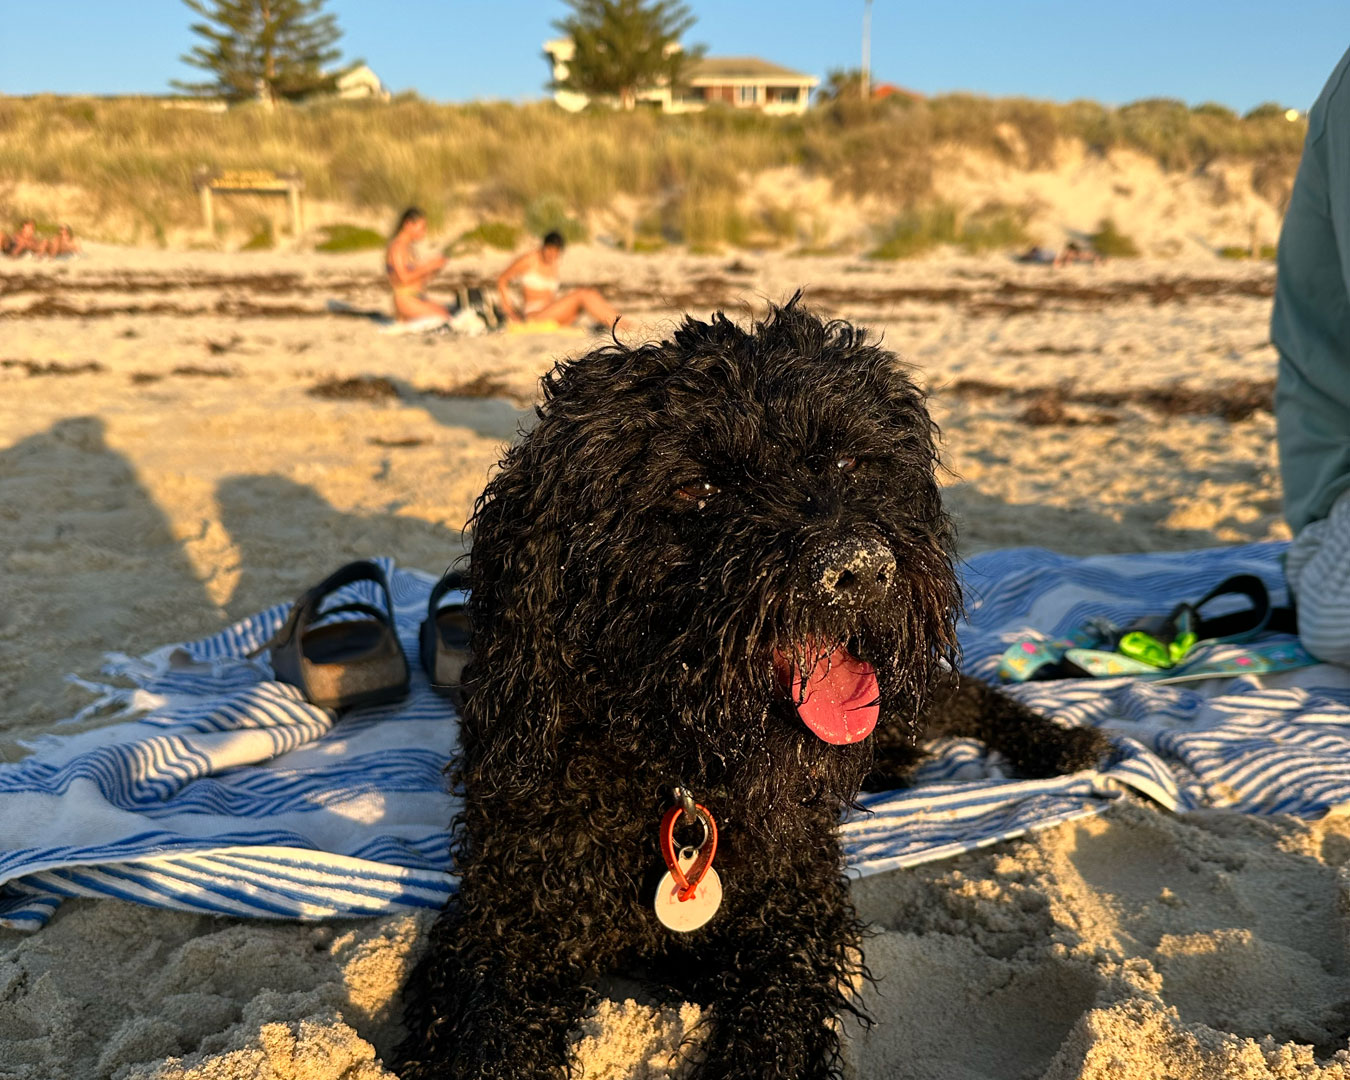 Dog Friendly Beaches in Sydney